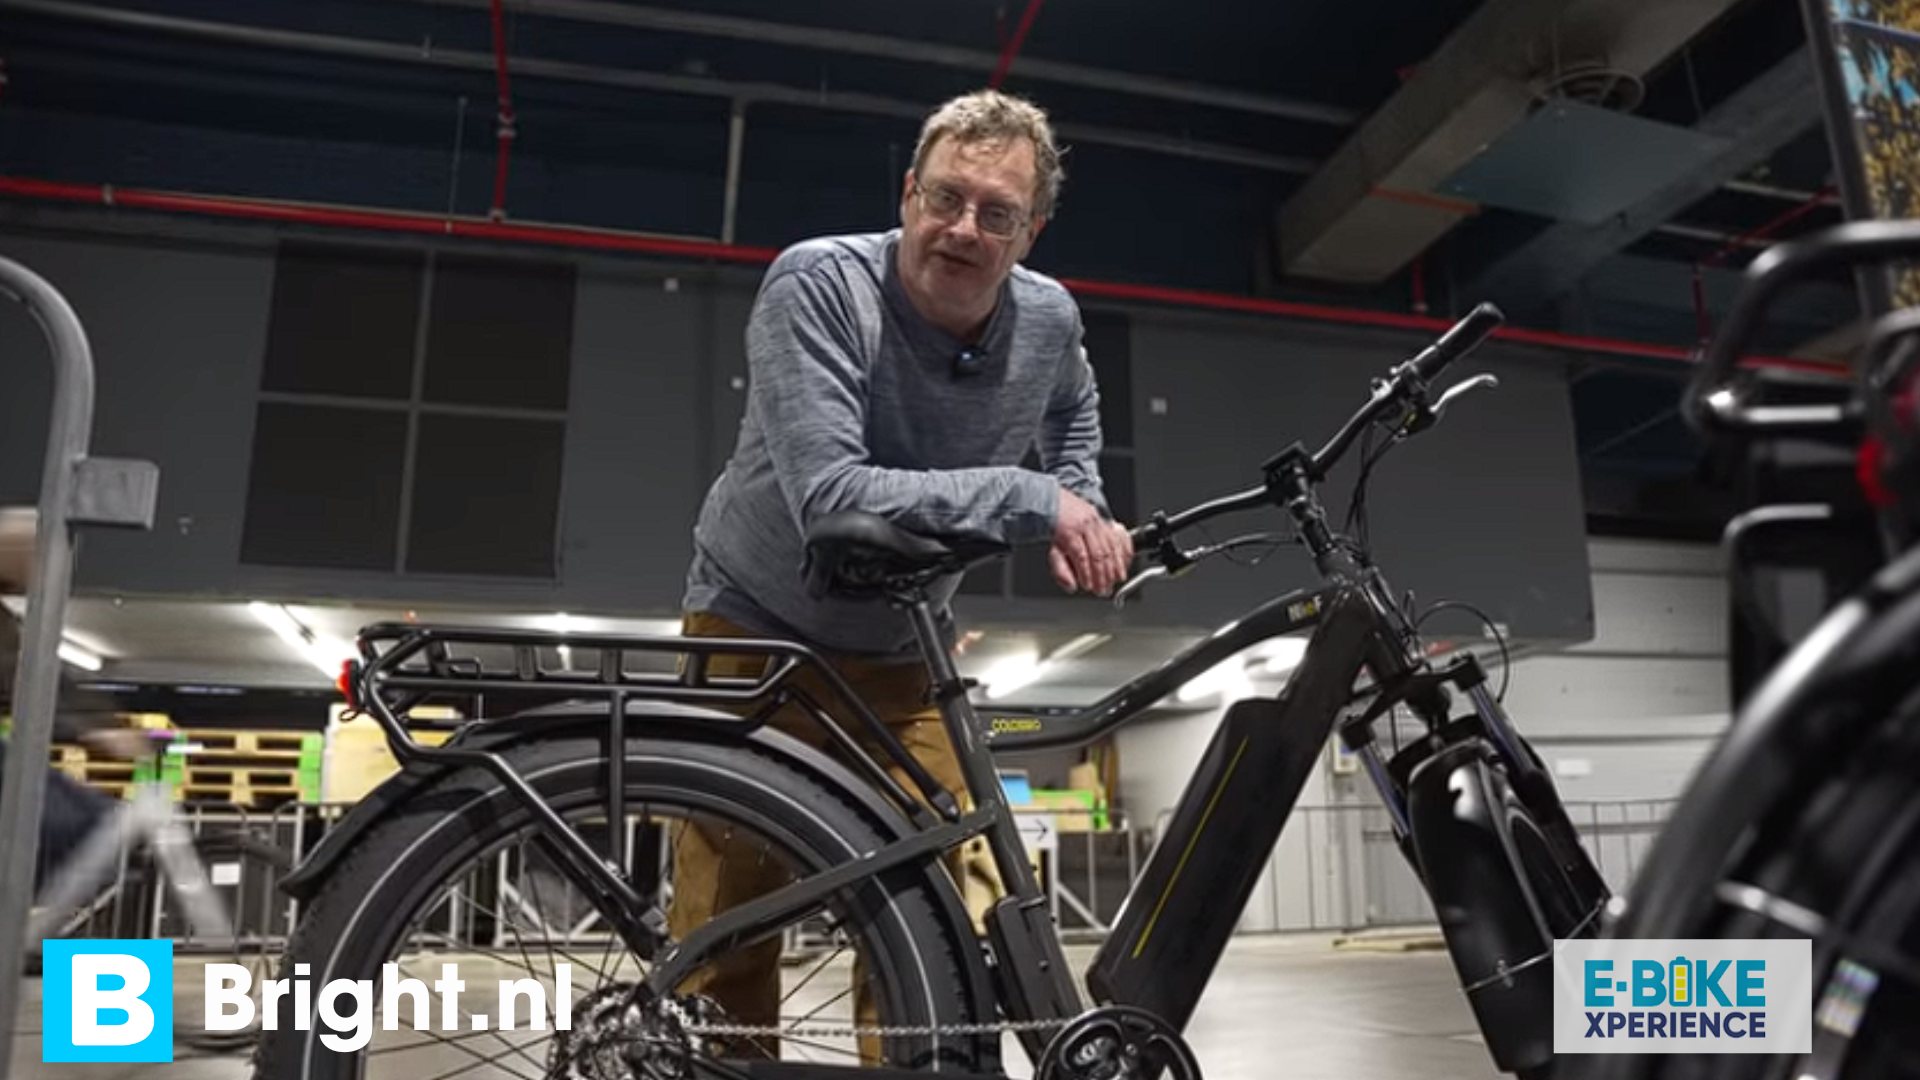 E-Bike Experience - Bright.nl Ebike